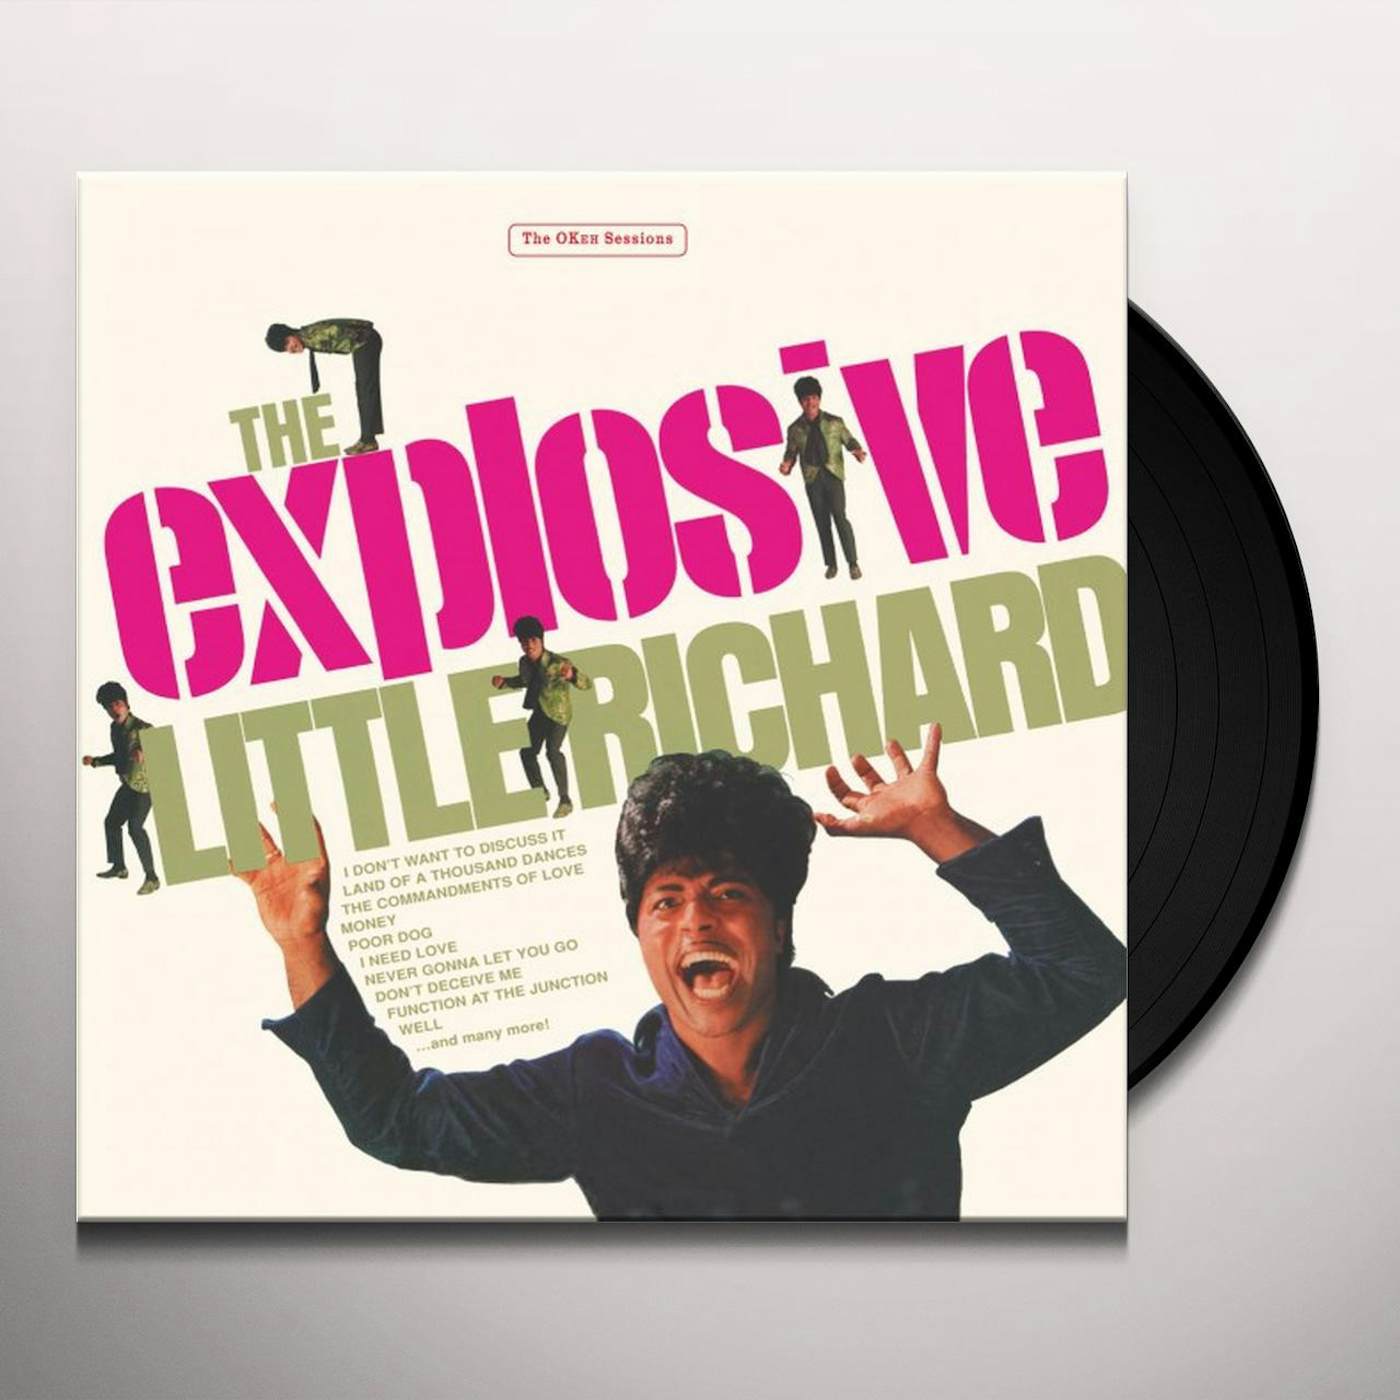 EXPLOSIVE LITTLE RICHARD! Vinyl Record